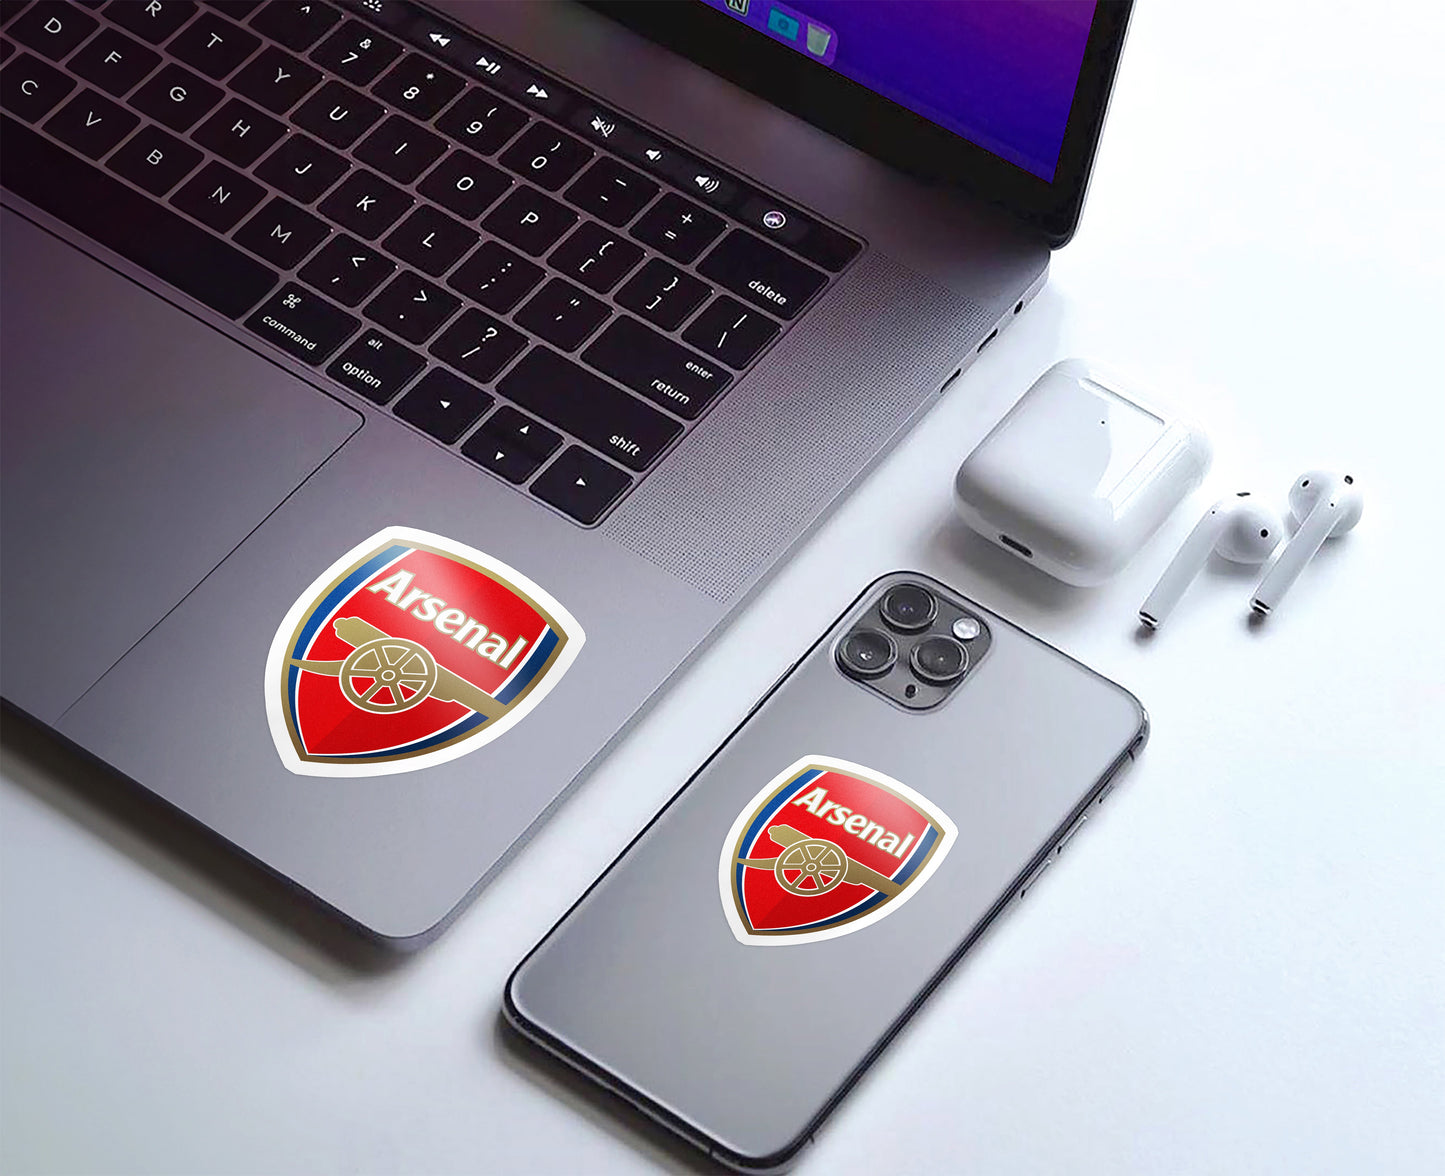 Arsenal FC Magnetic Sticker